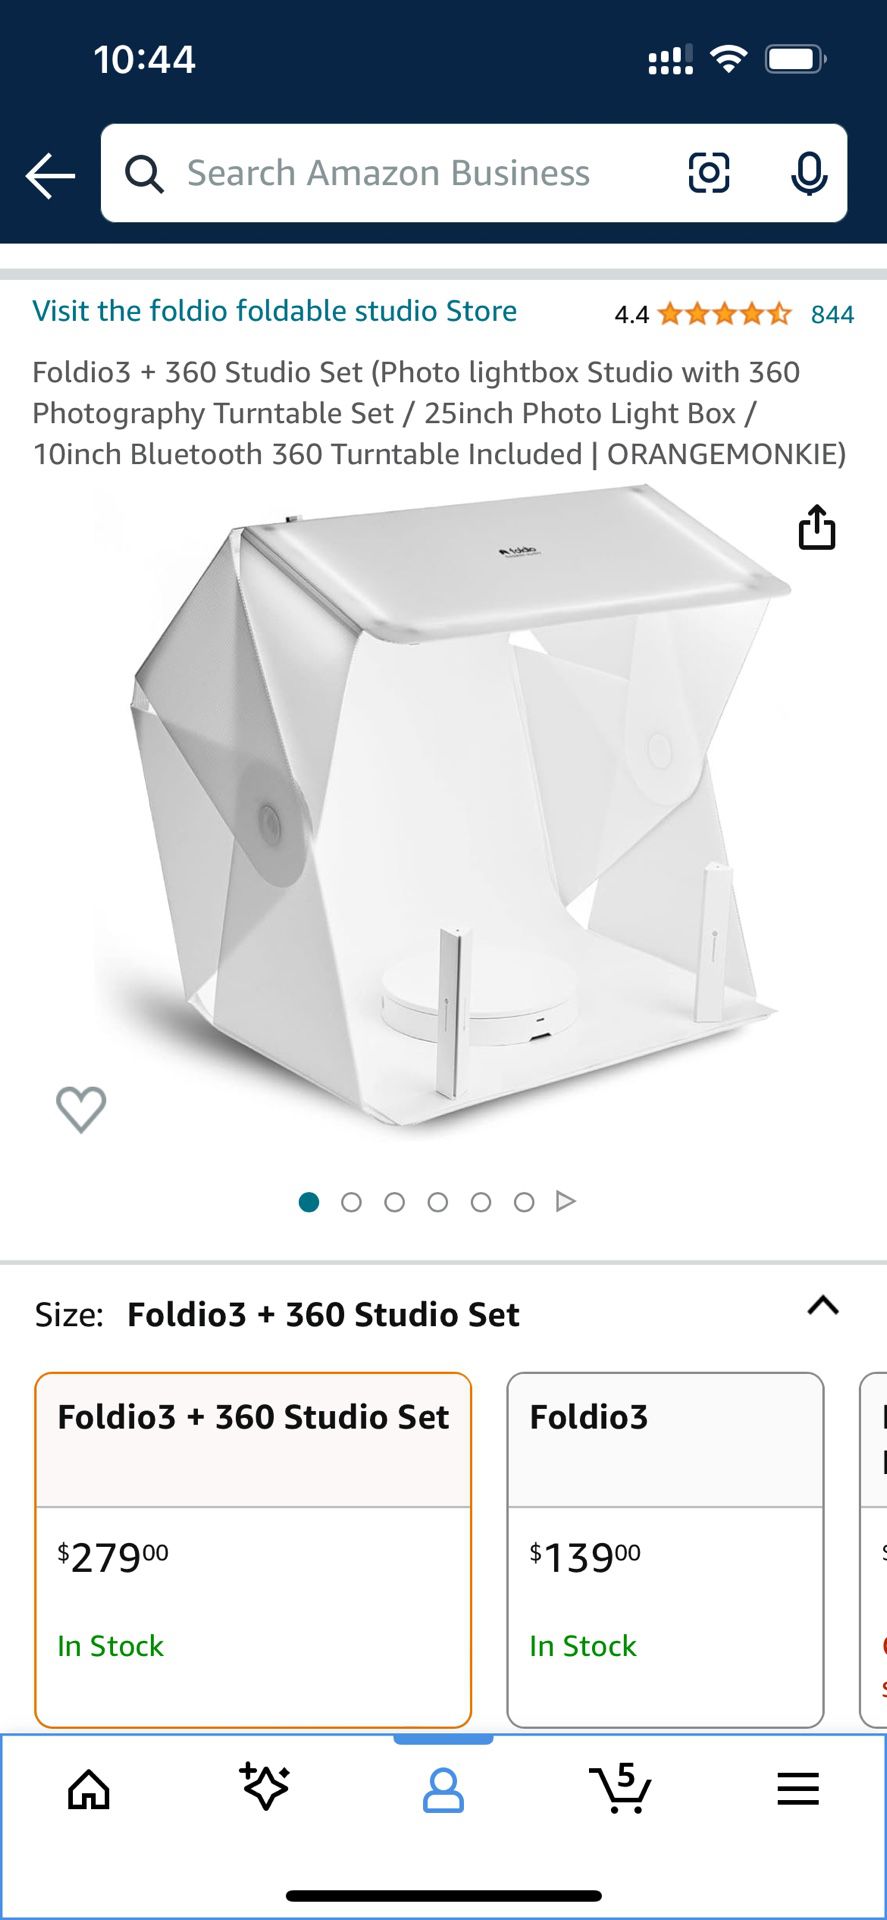 Foldio3 + 360 Studio Set (Photo lightbox Studio with 360 Photography Turntable Set / 25inch Photo Light Box / 10inch Bluetooth 360 Turntable Included 